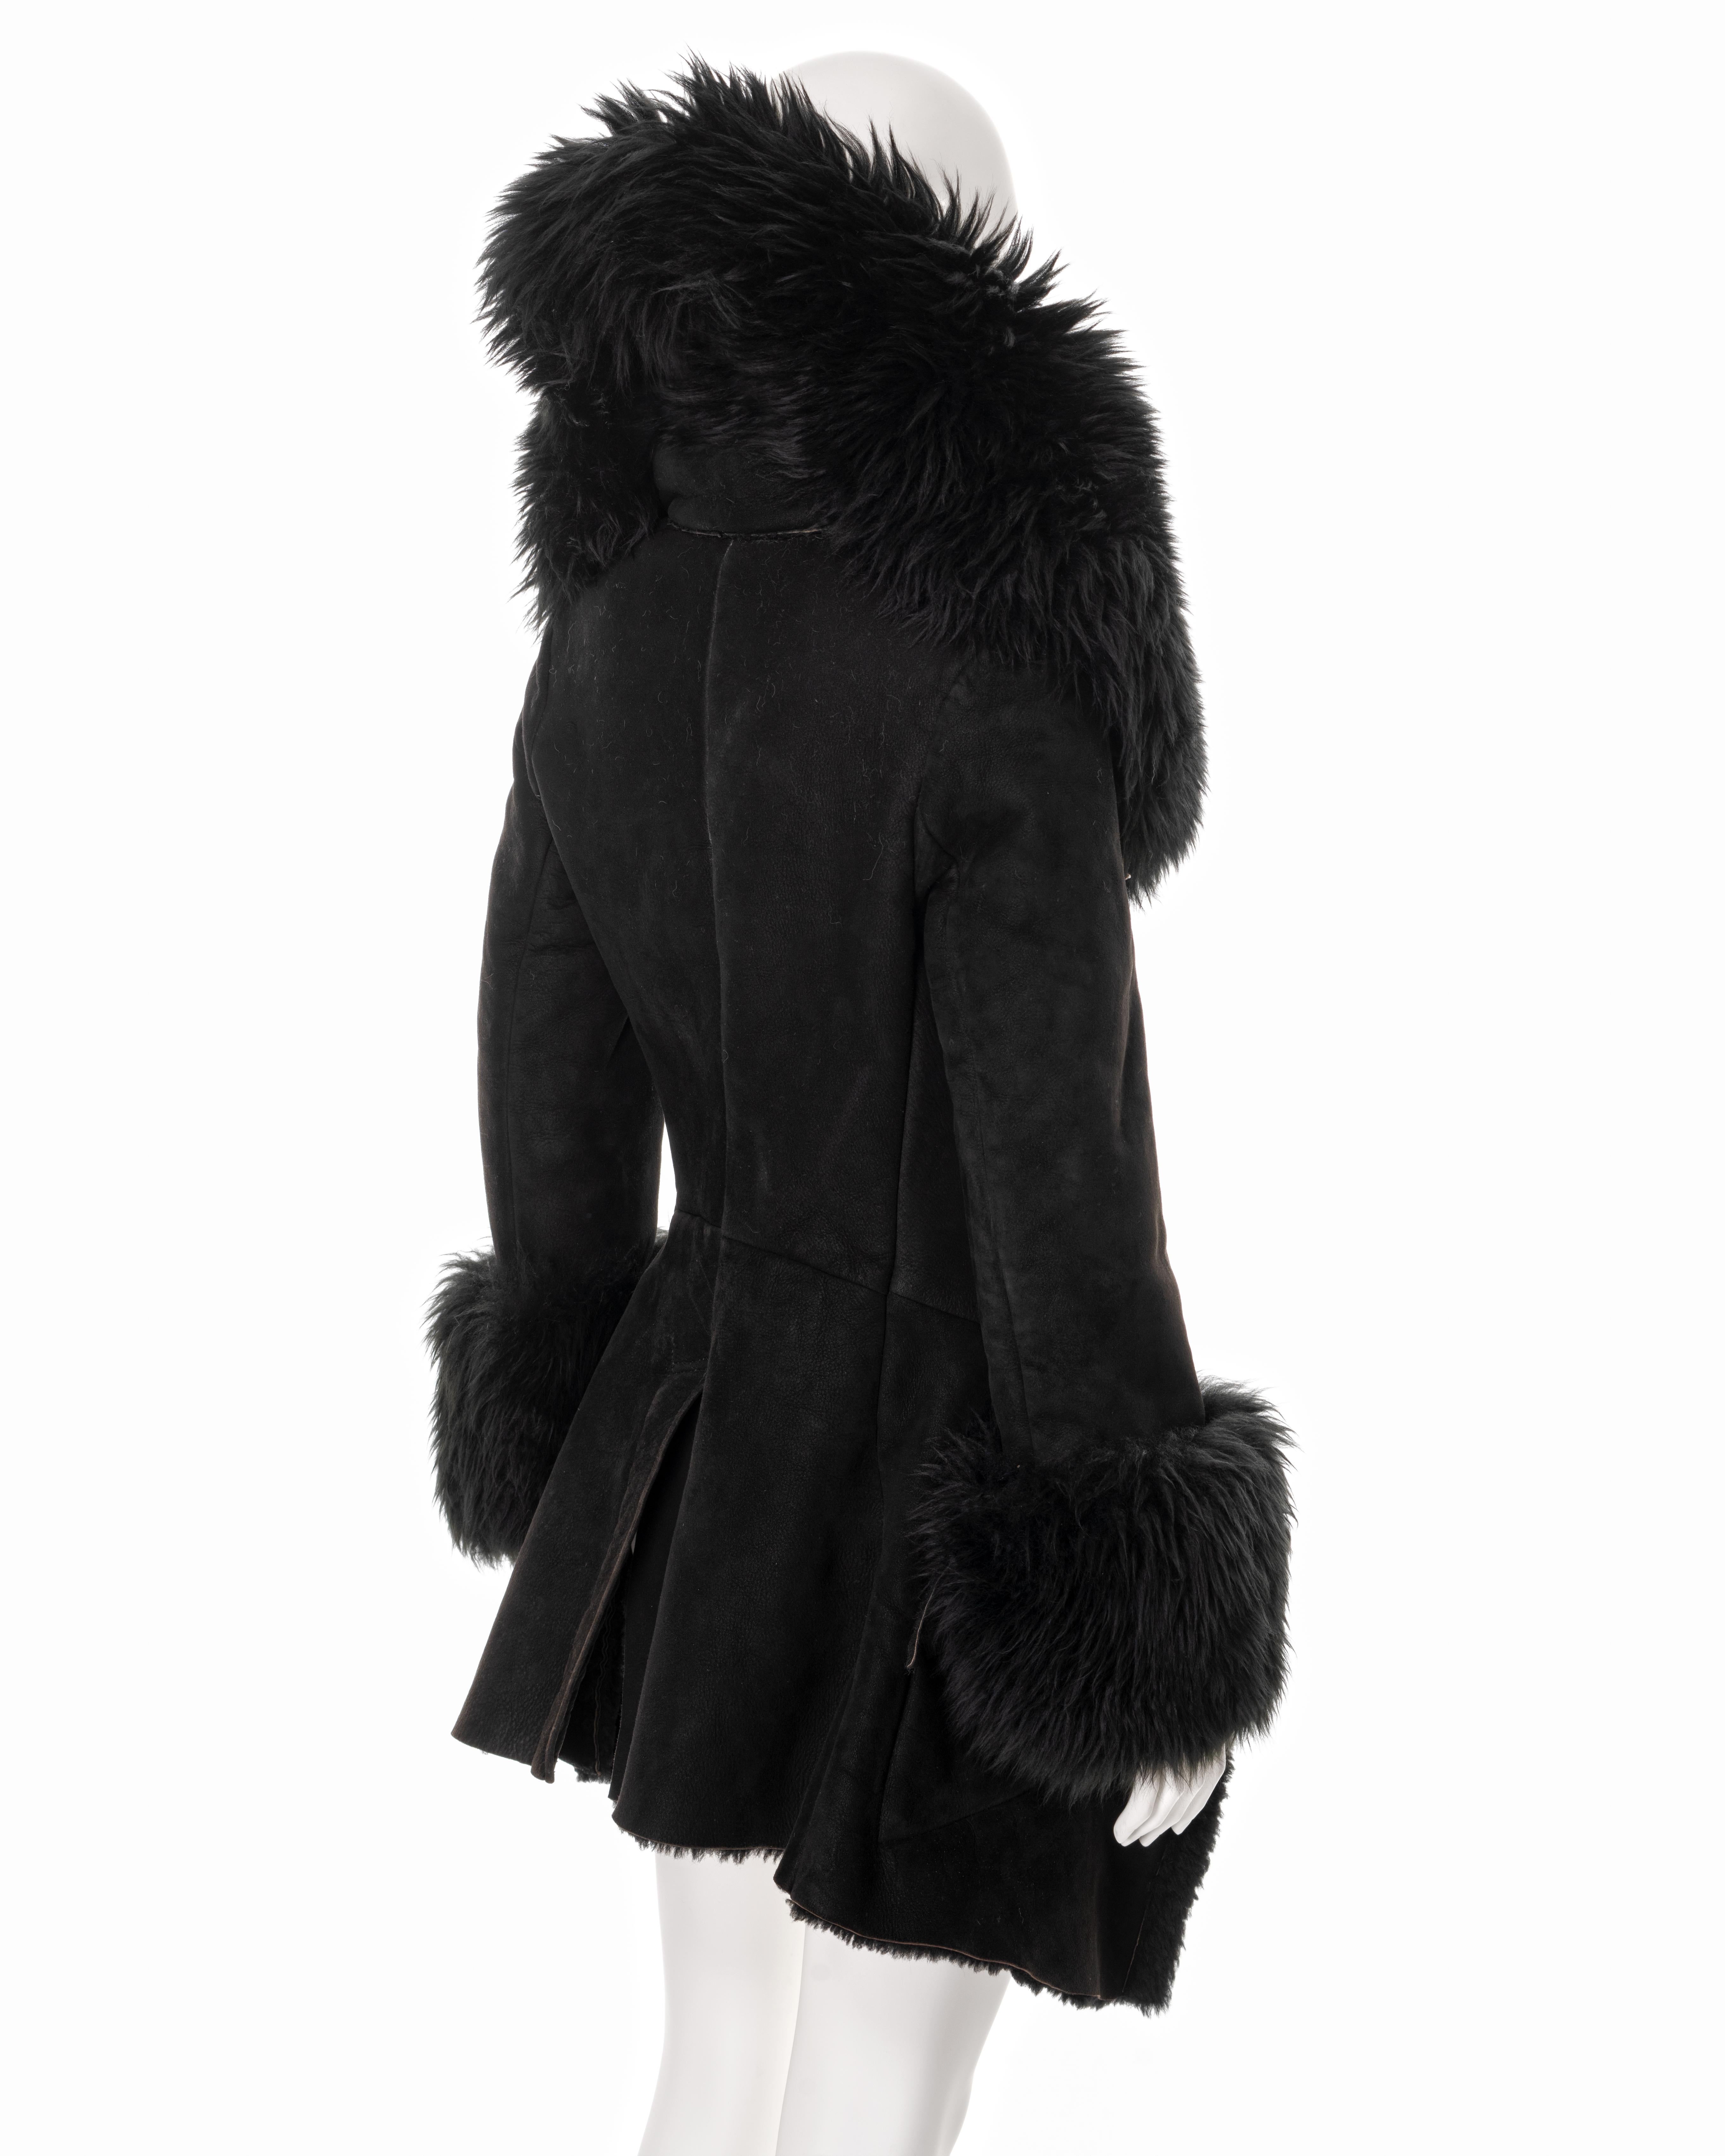 Vivienne Westwood black sheepskin coat, fw 1992 For Sale 8